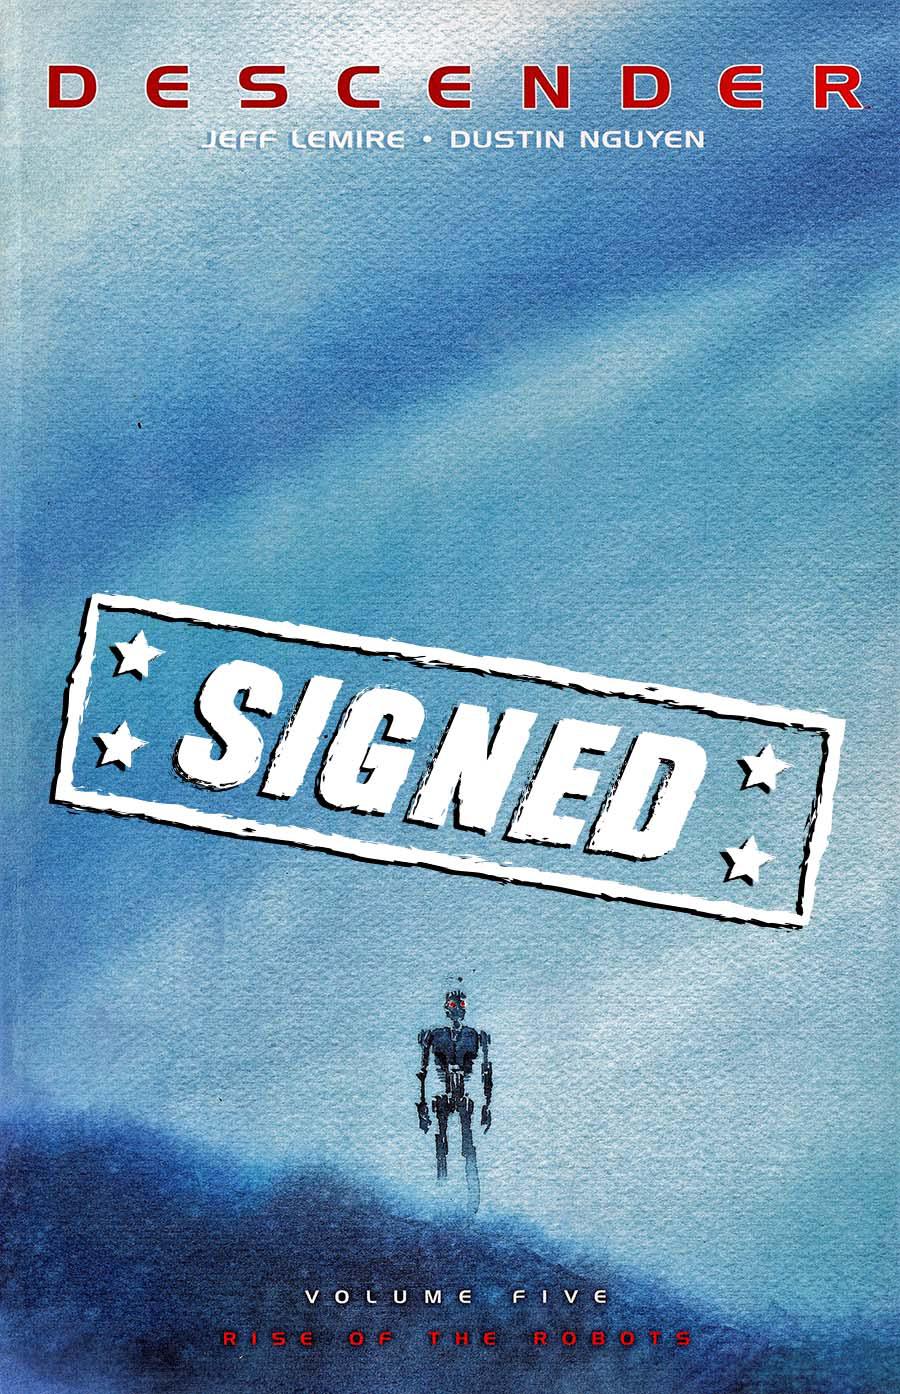 Descender Vol 5 Rise Of The Robots TP Signed By Jeff Lemire & Dustin Nguyen